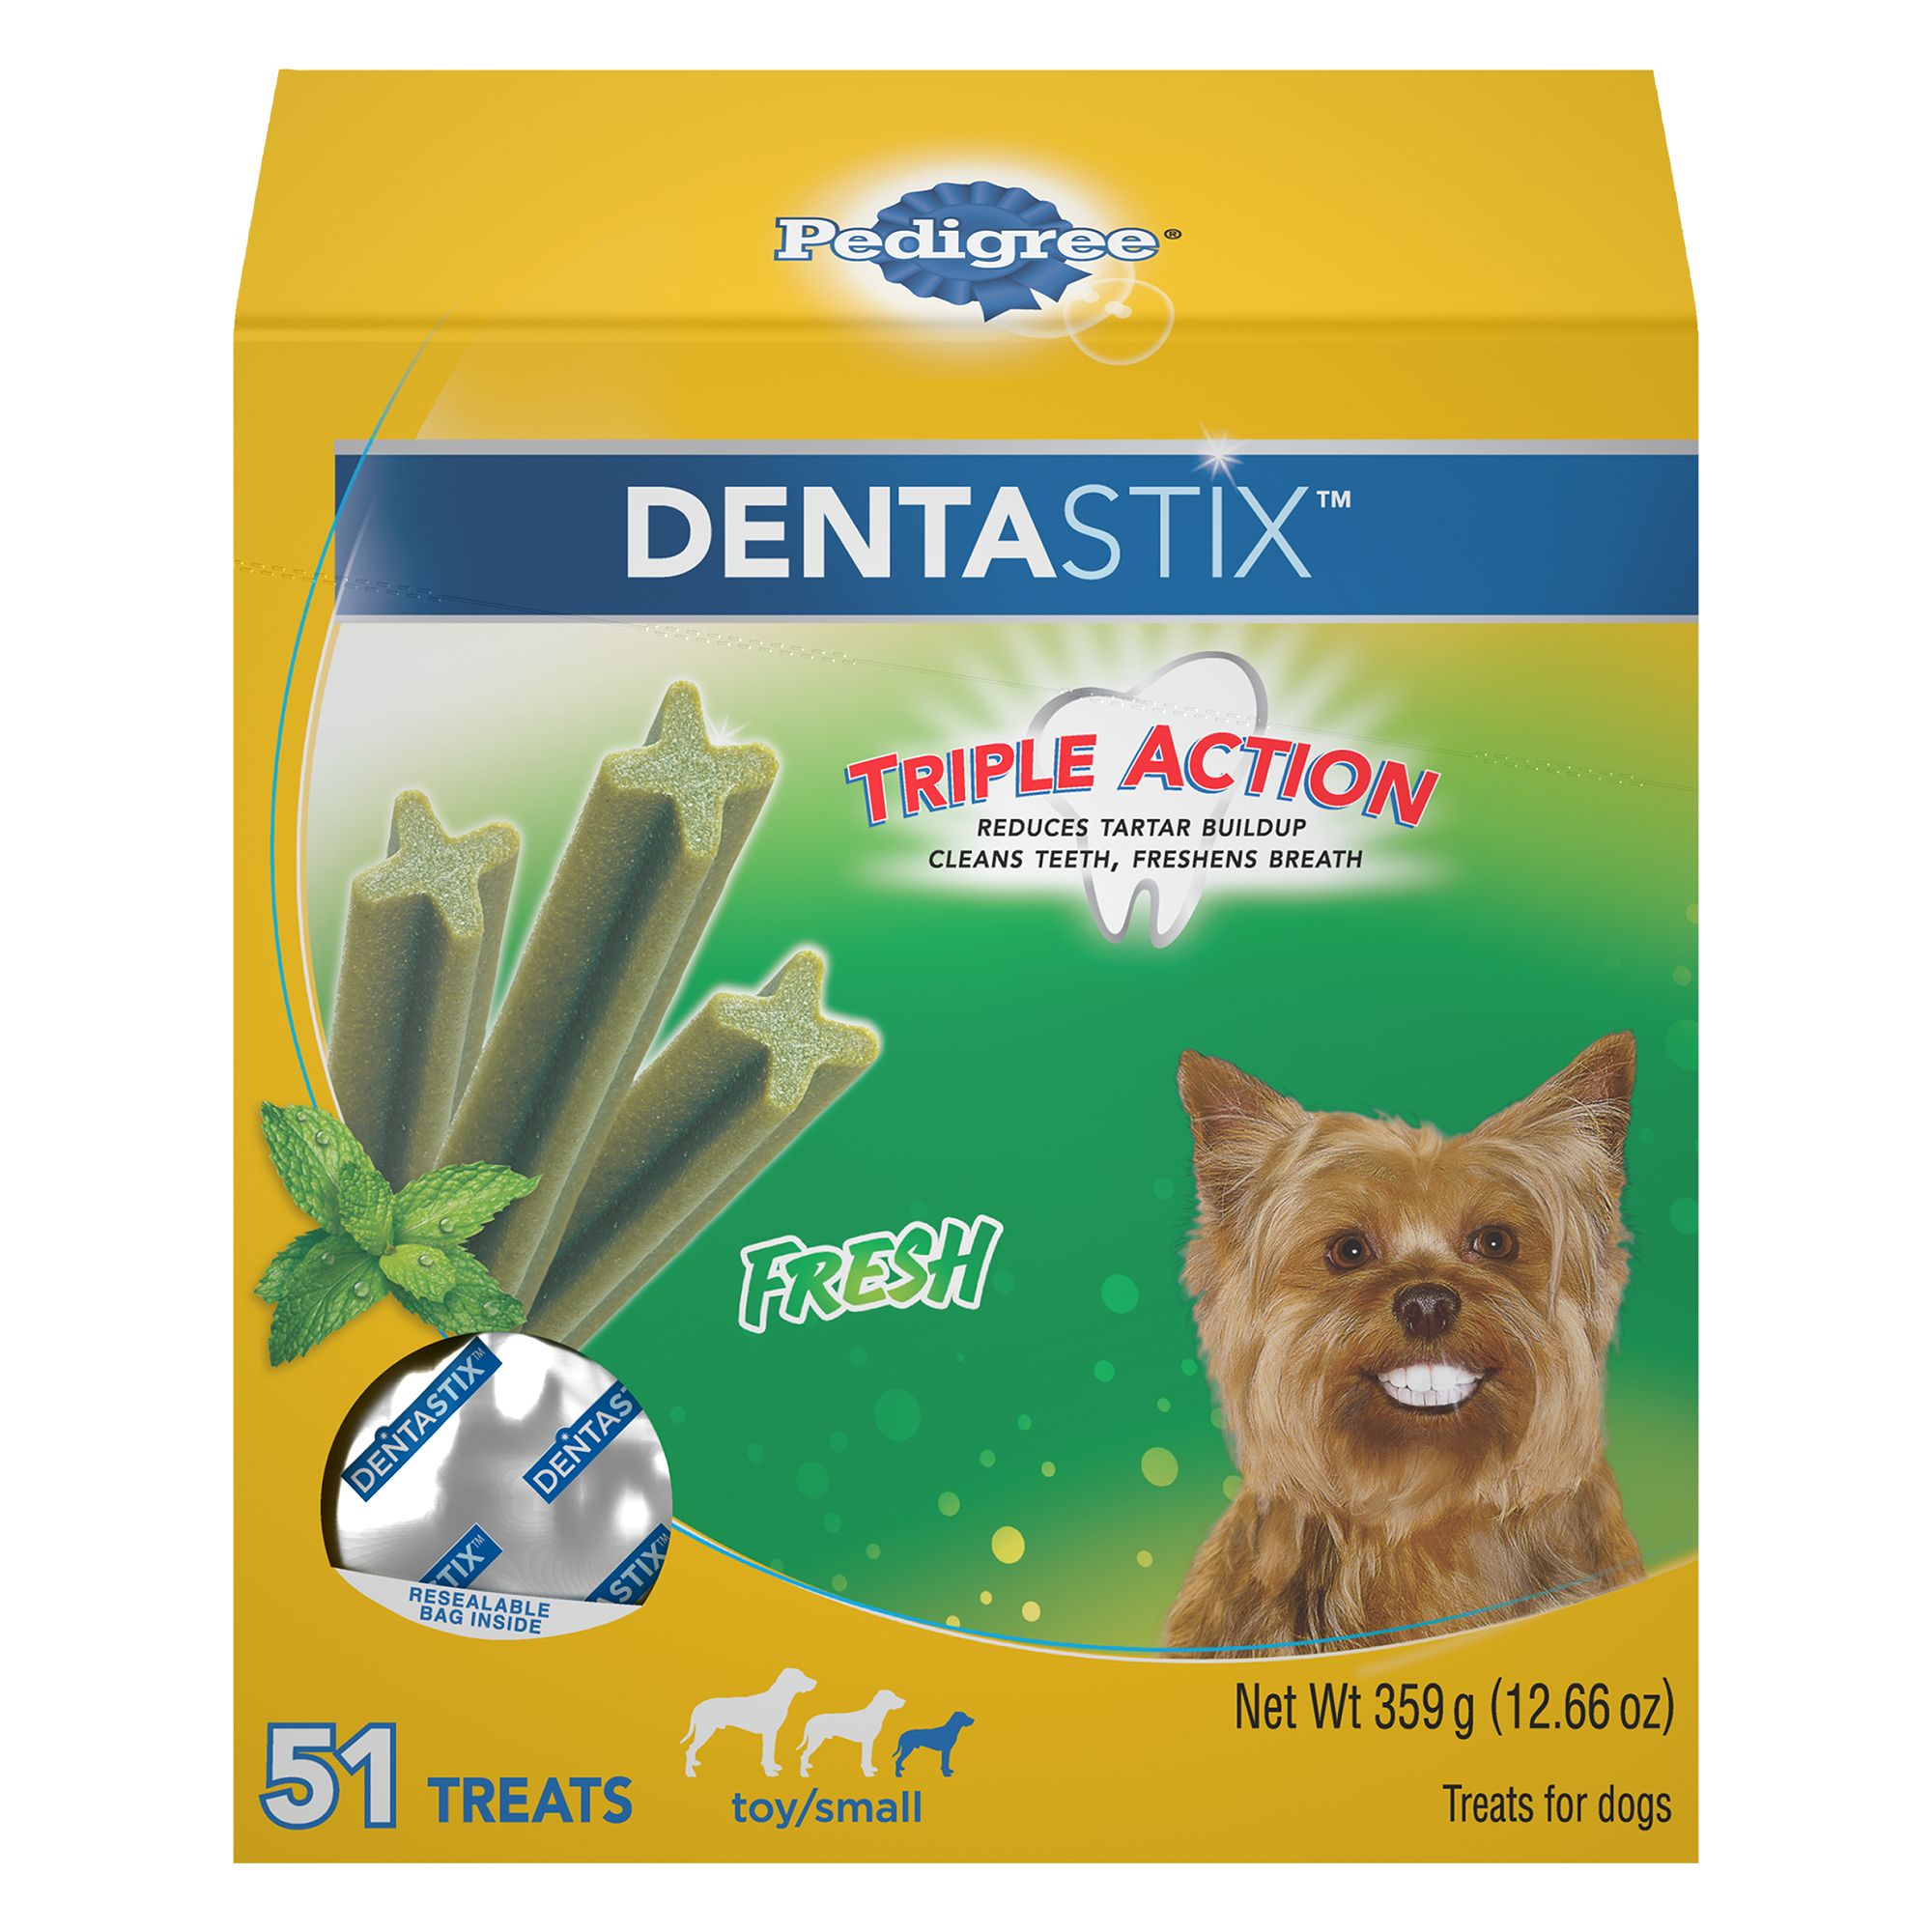 dentastix small dogs